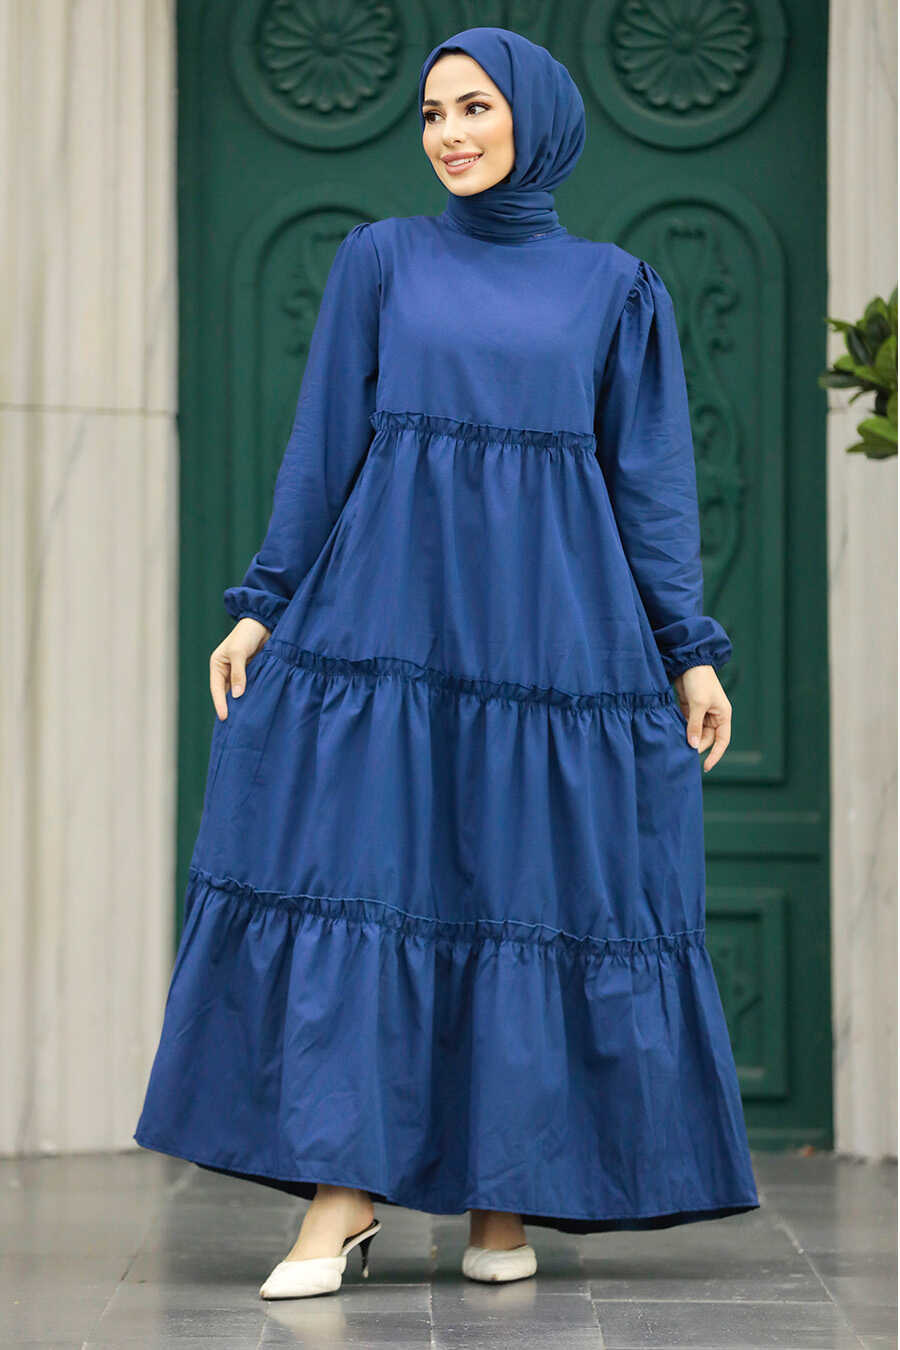 İndigo Blue Hijab Turkish Dress 29712IM 